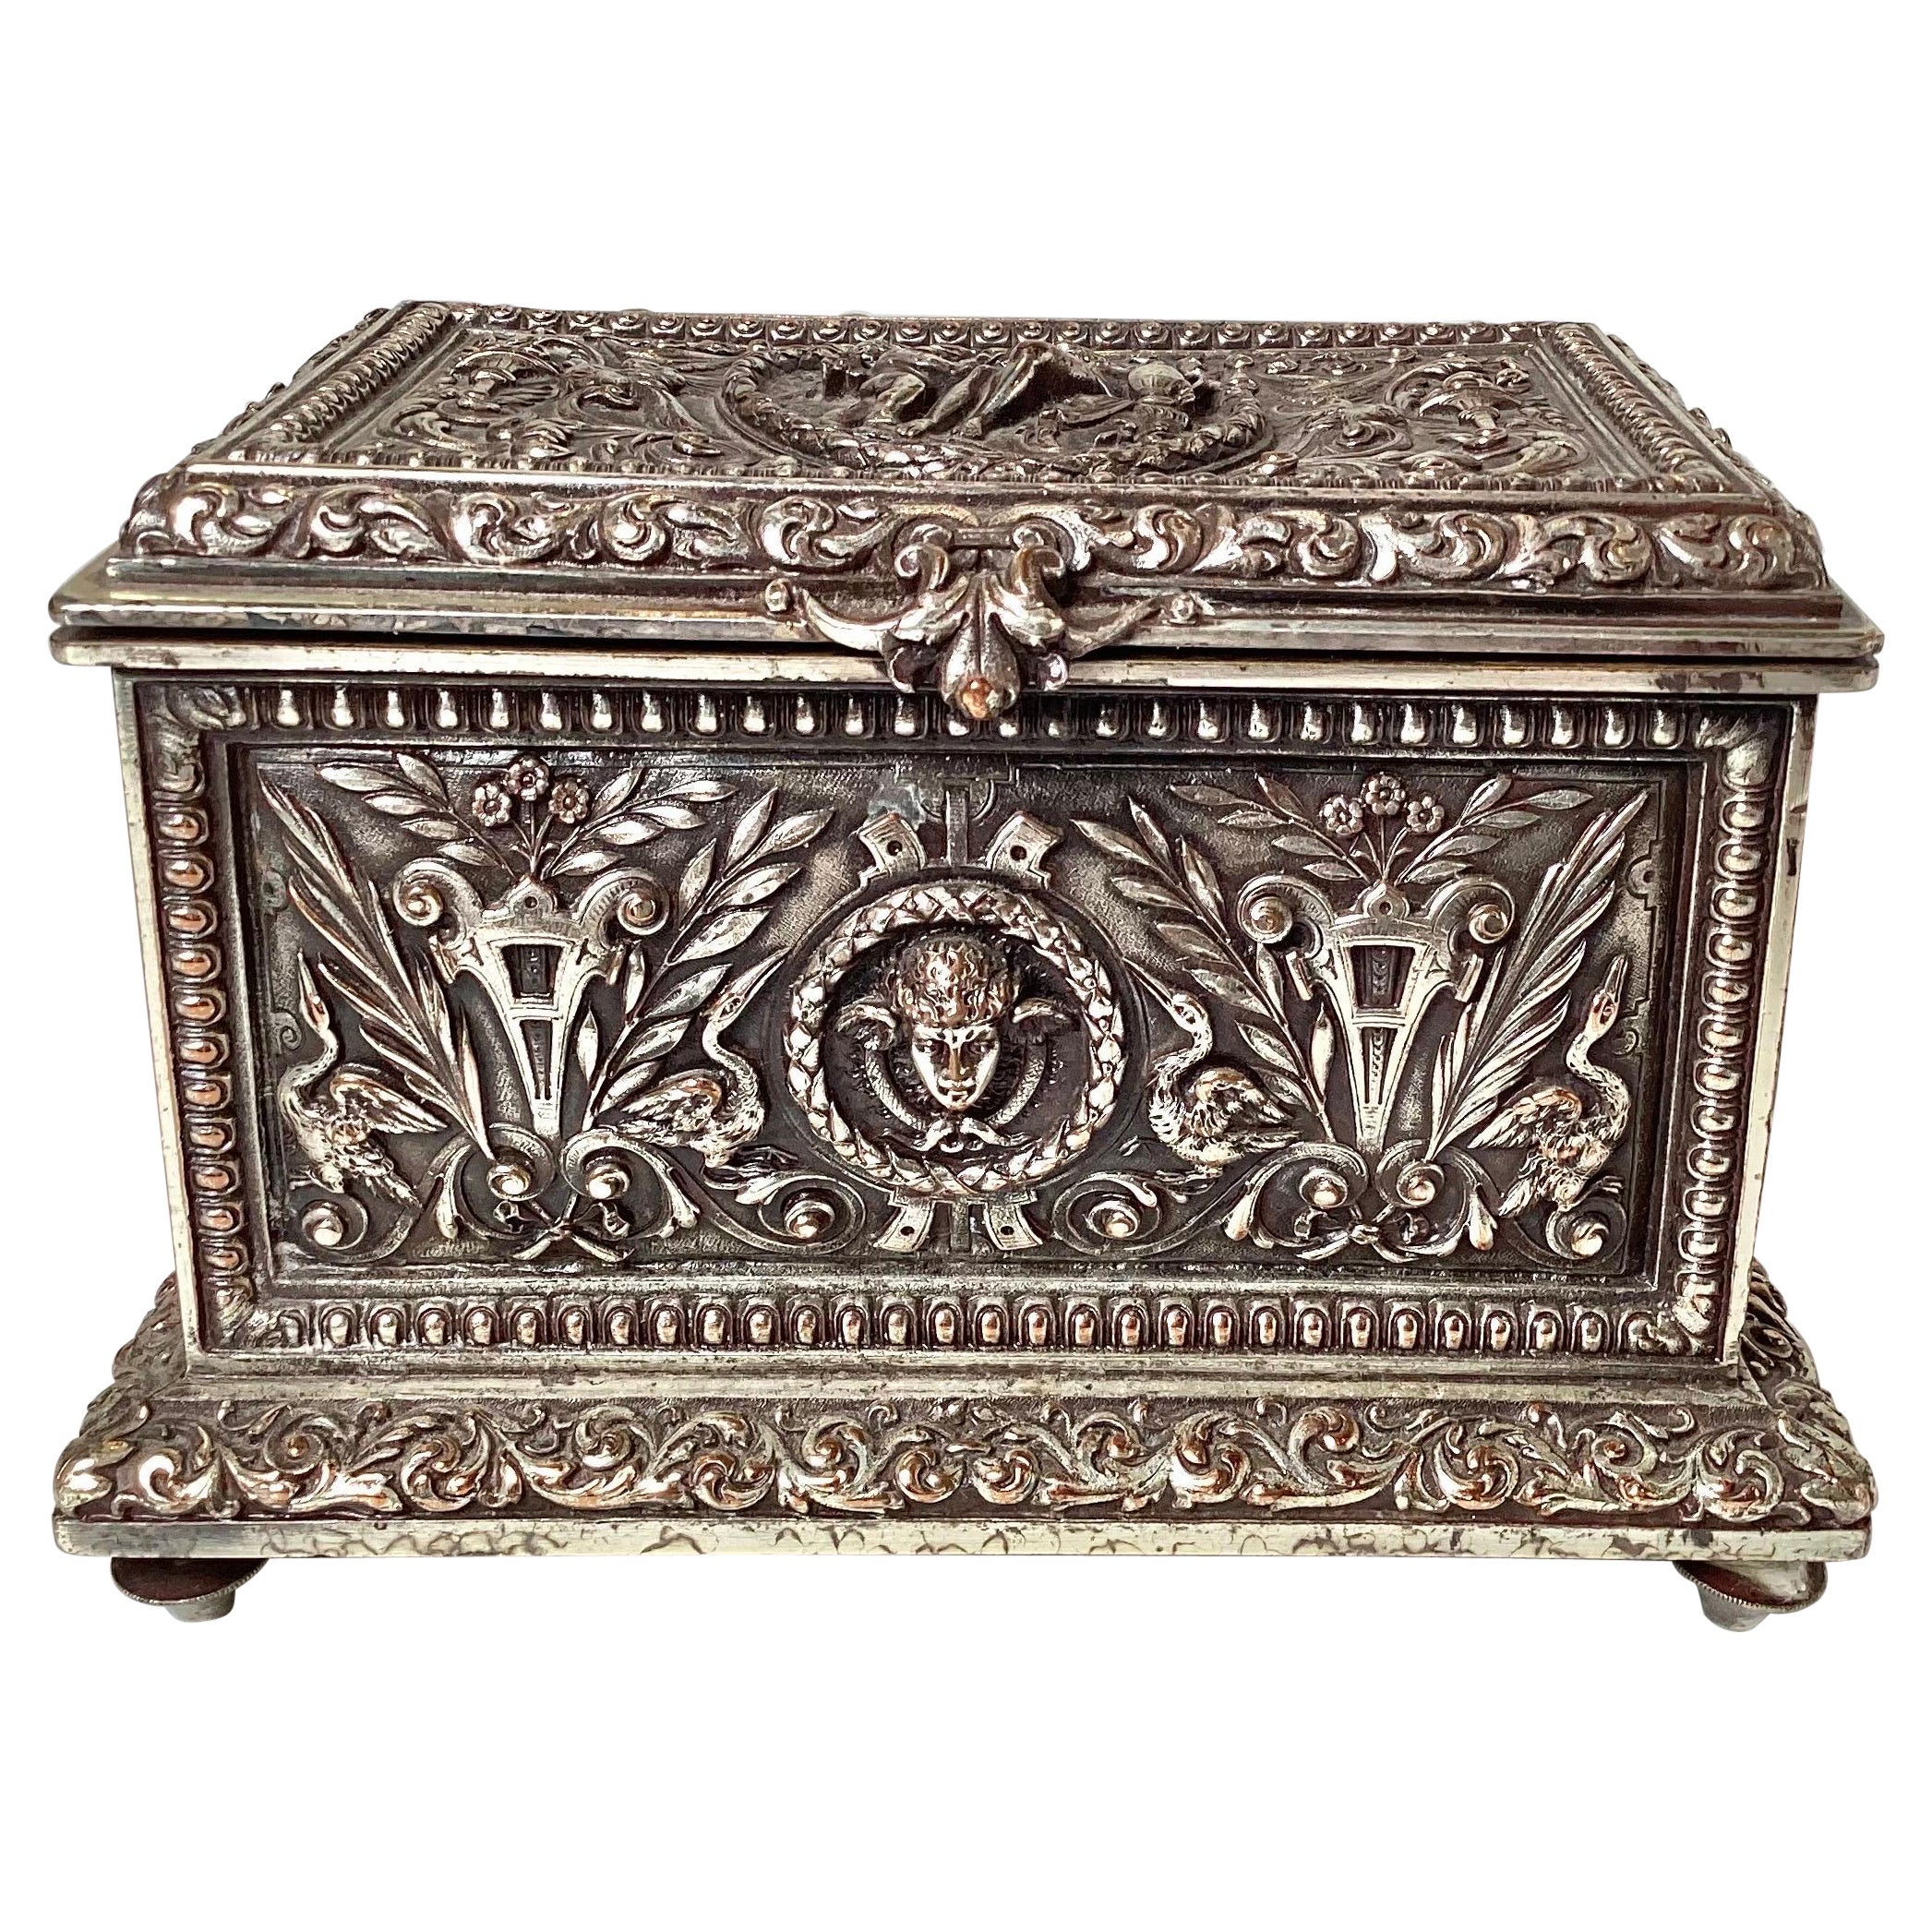 19th Century English Silvered Bronze Hinged Lid Box